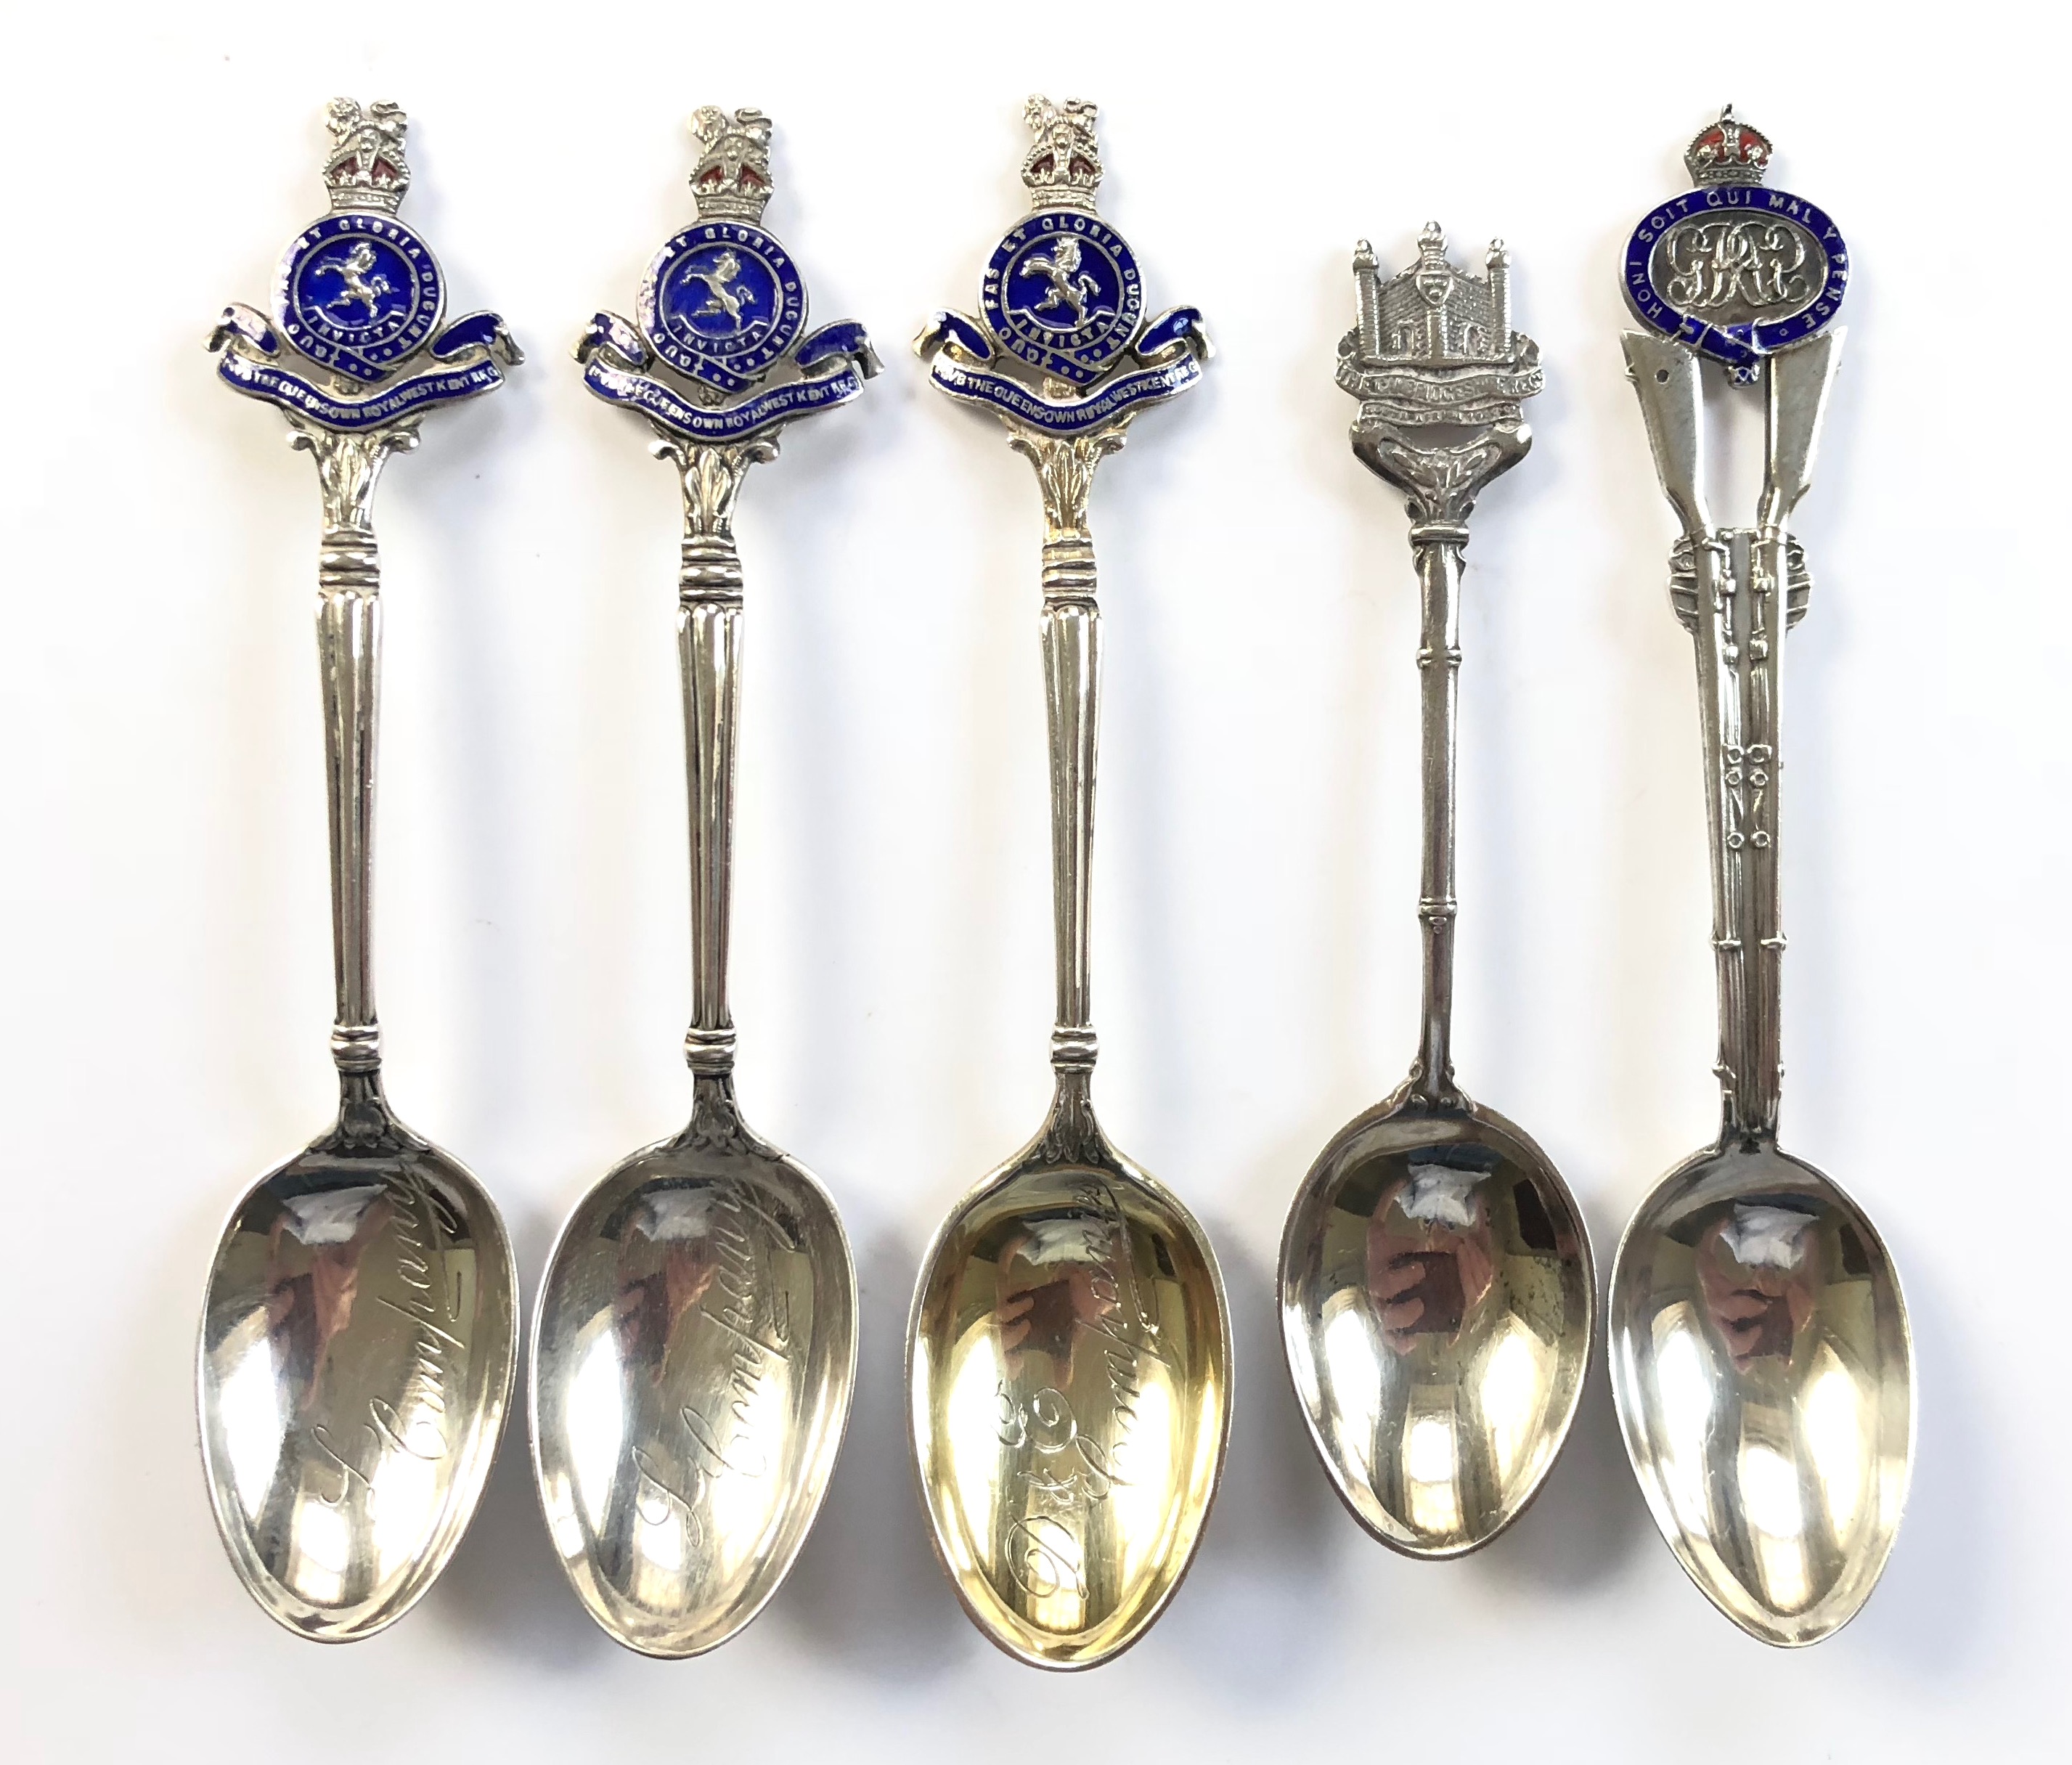 1 VB West Kent, Cambridge & Grenadier Guards, 5 Regimental HM Silver Teaspoons. All bearing silver